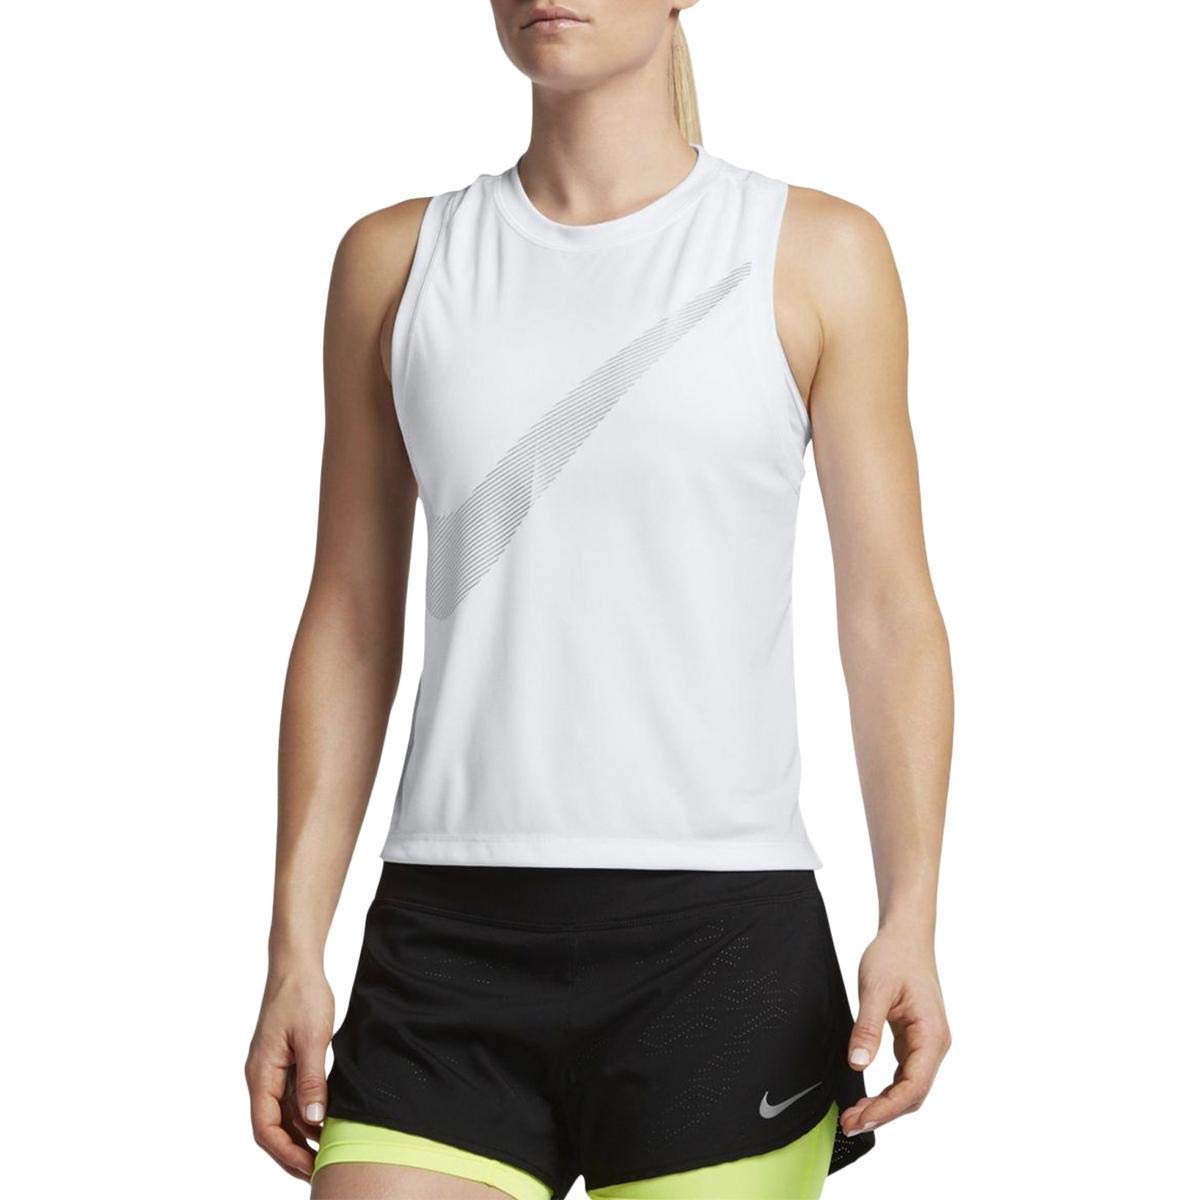 Nike Womens Dry Metallic Running Tank Top White Large 820652579194 Ebay 